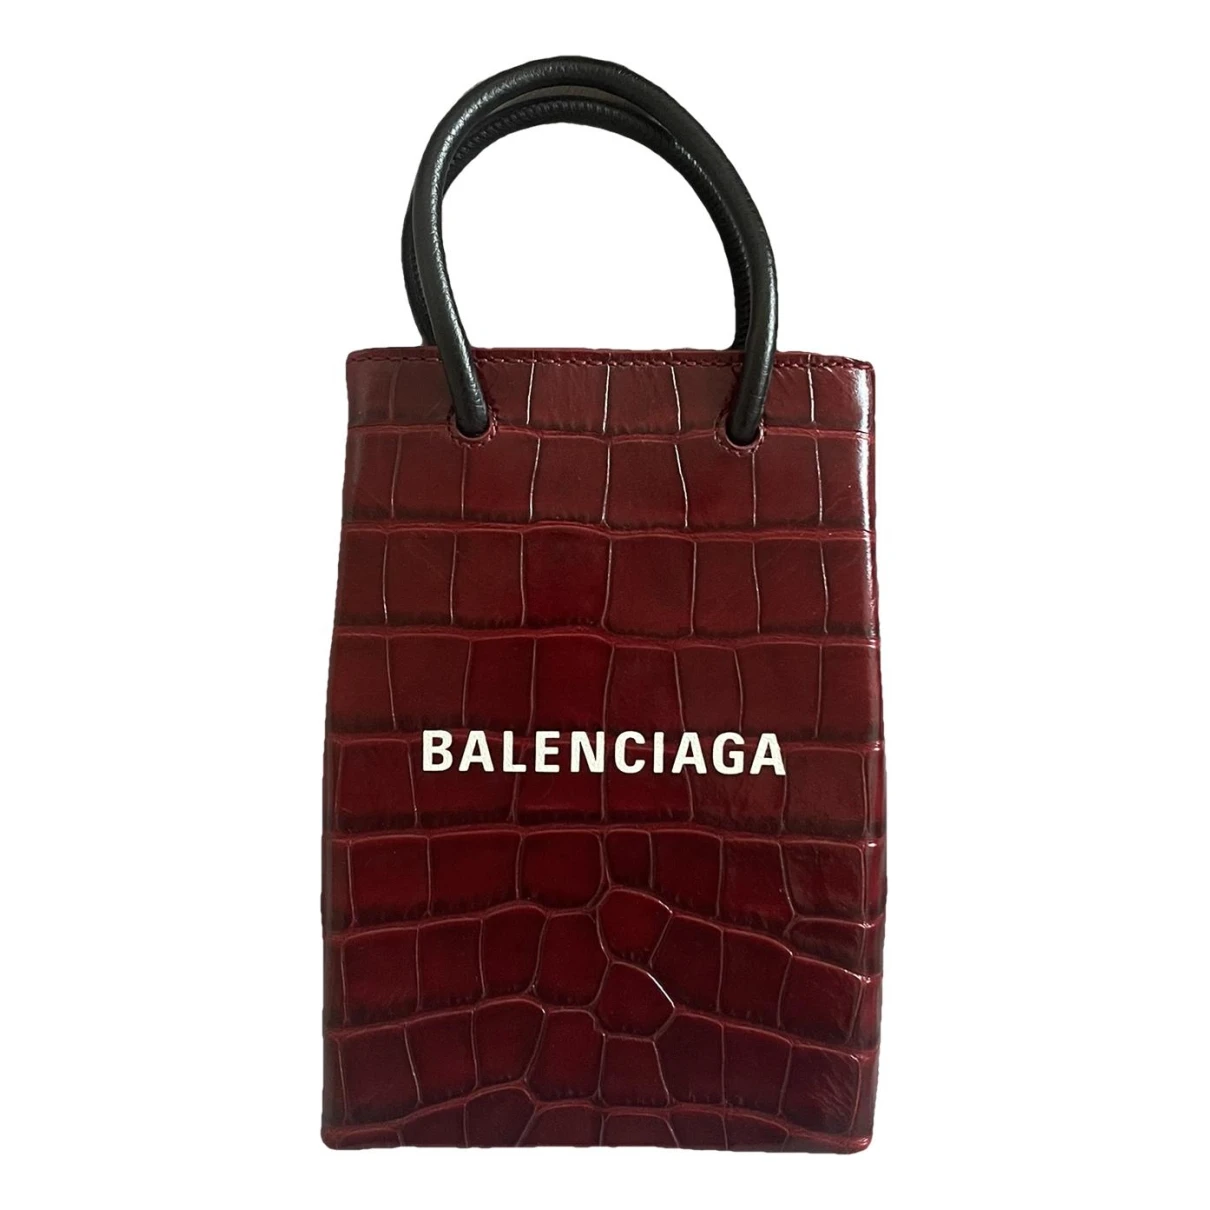 Pre-owned Balenciaga Leather Clutch Bag In Burgundy